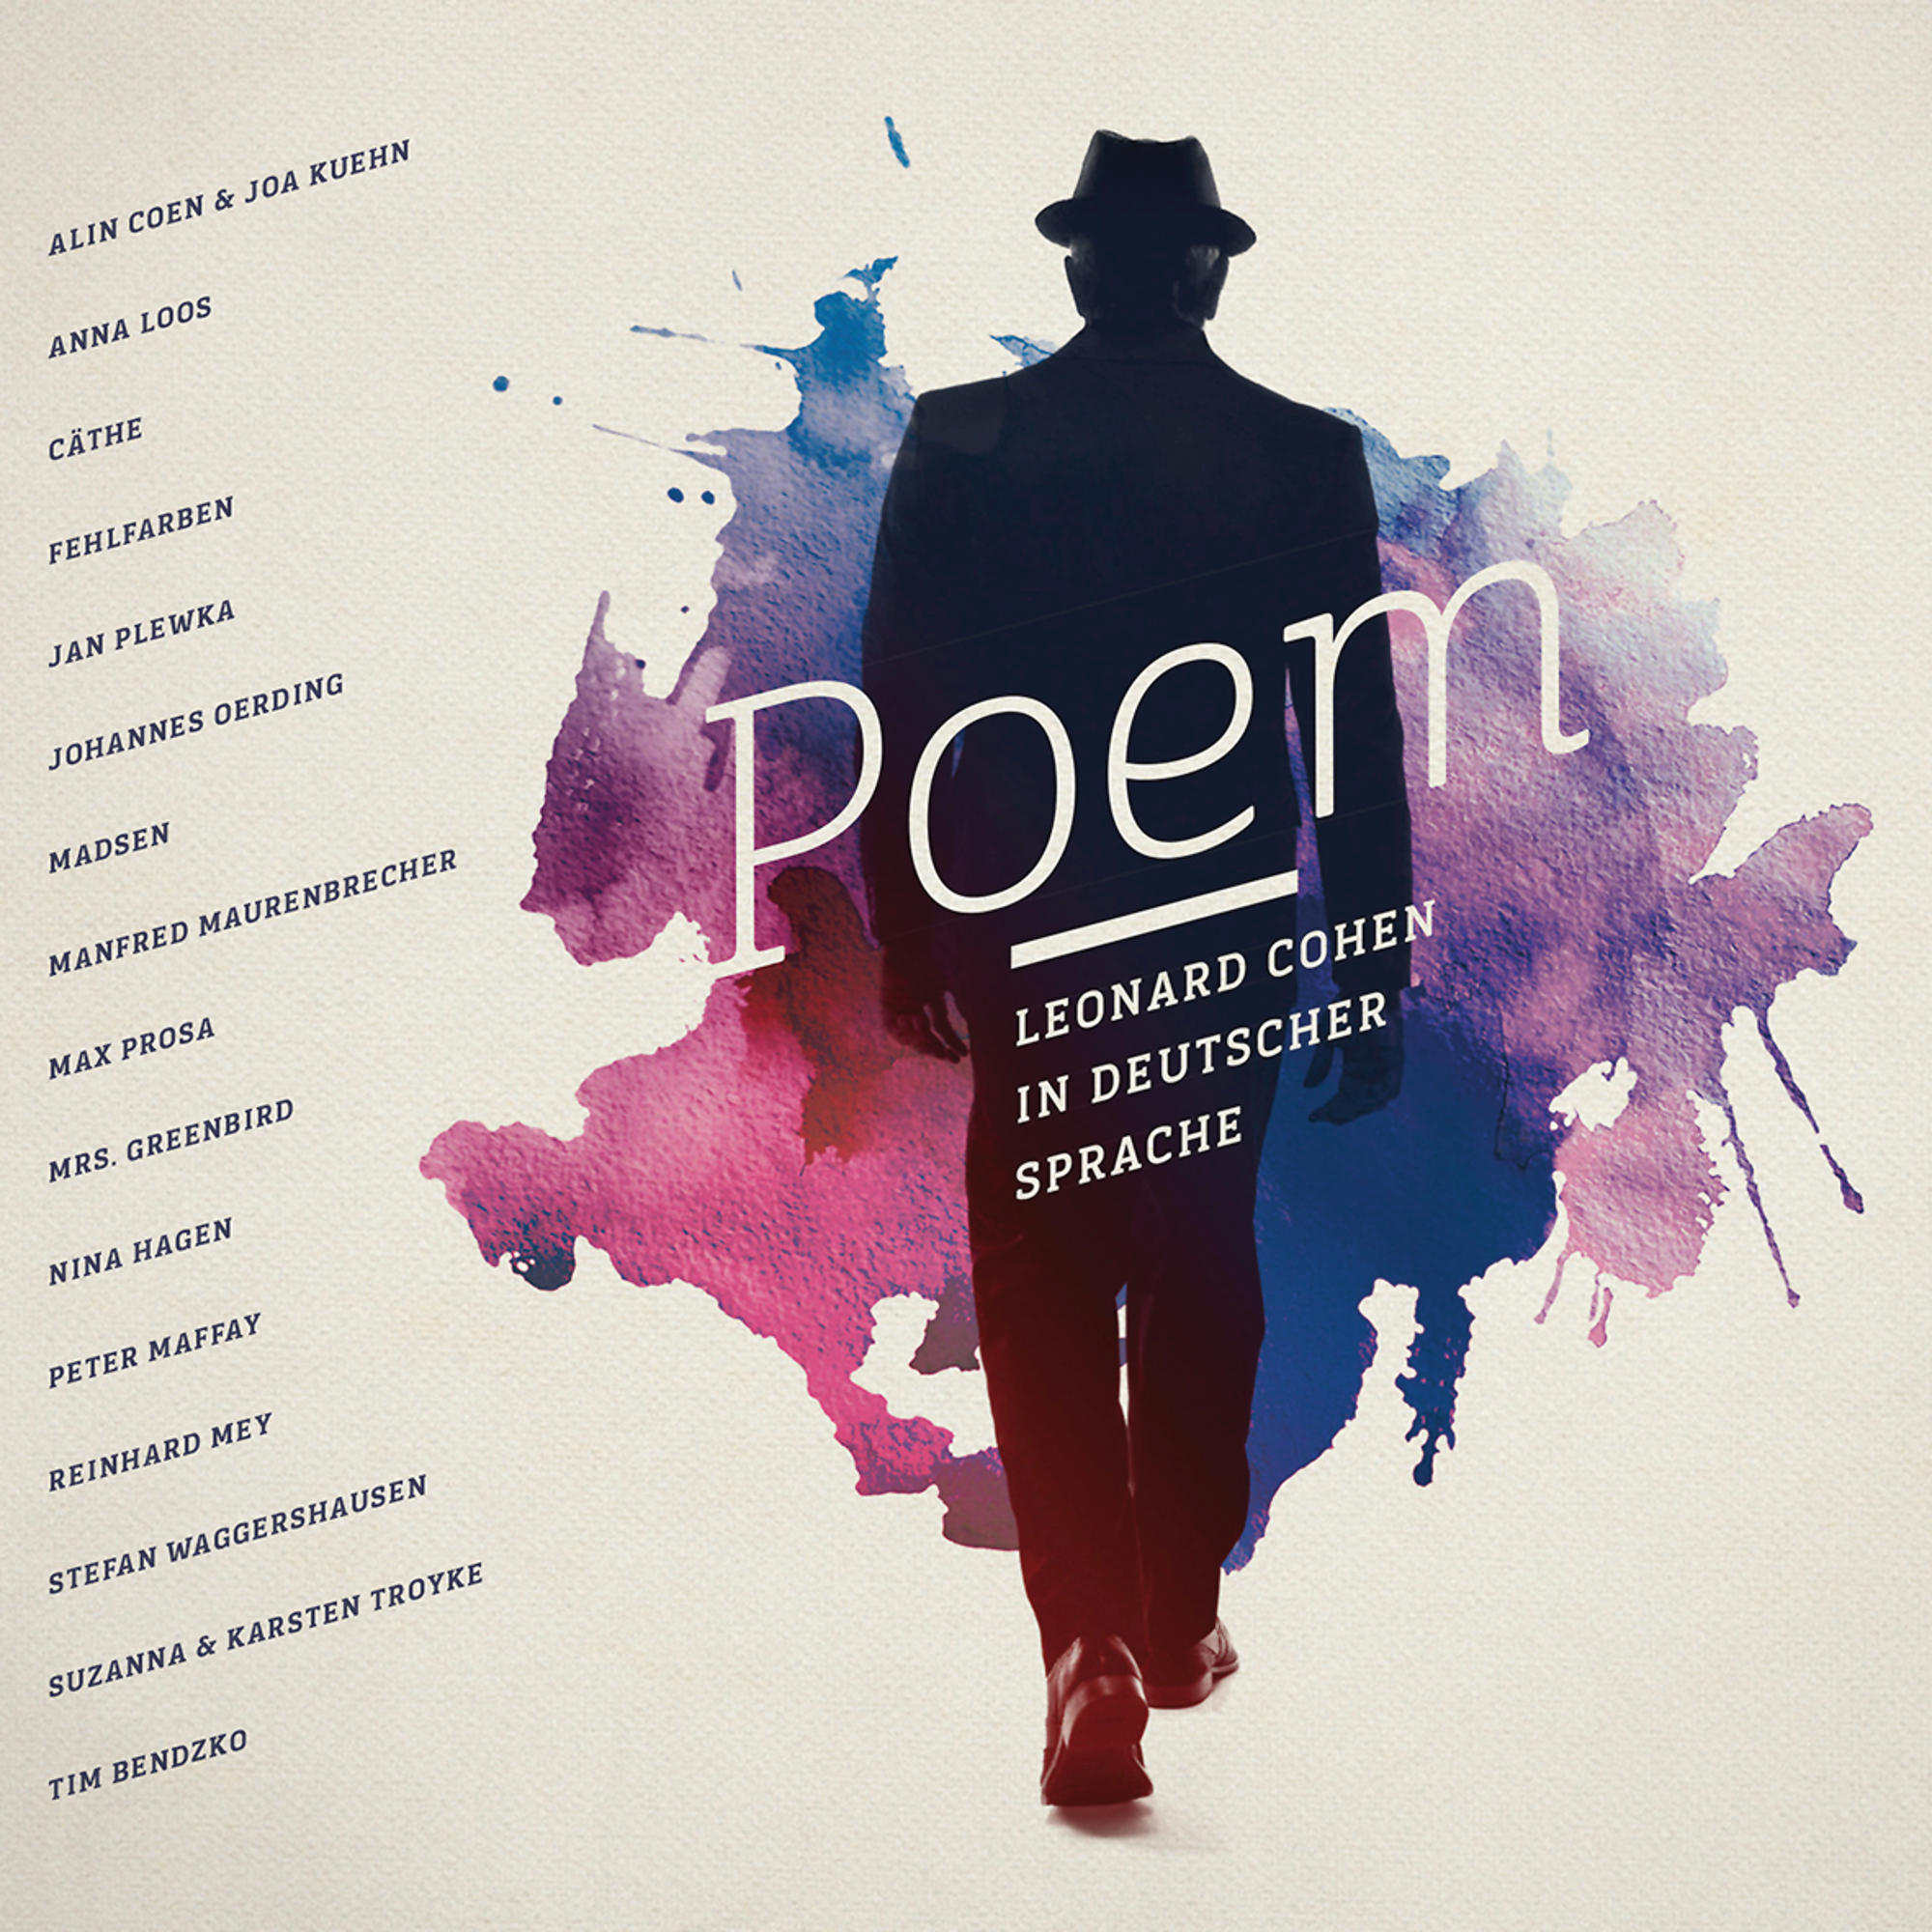 VARIOUS - Poem-Leonard Deutscher In Cohen (Vinyl) - Sprache